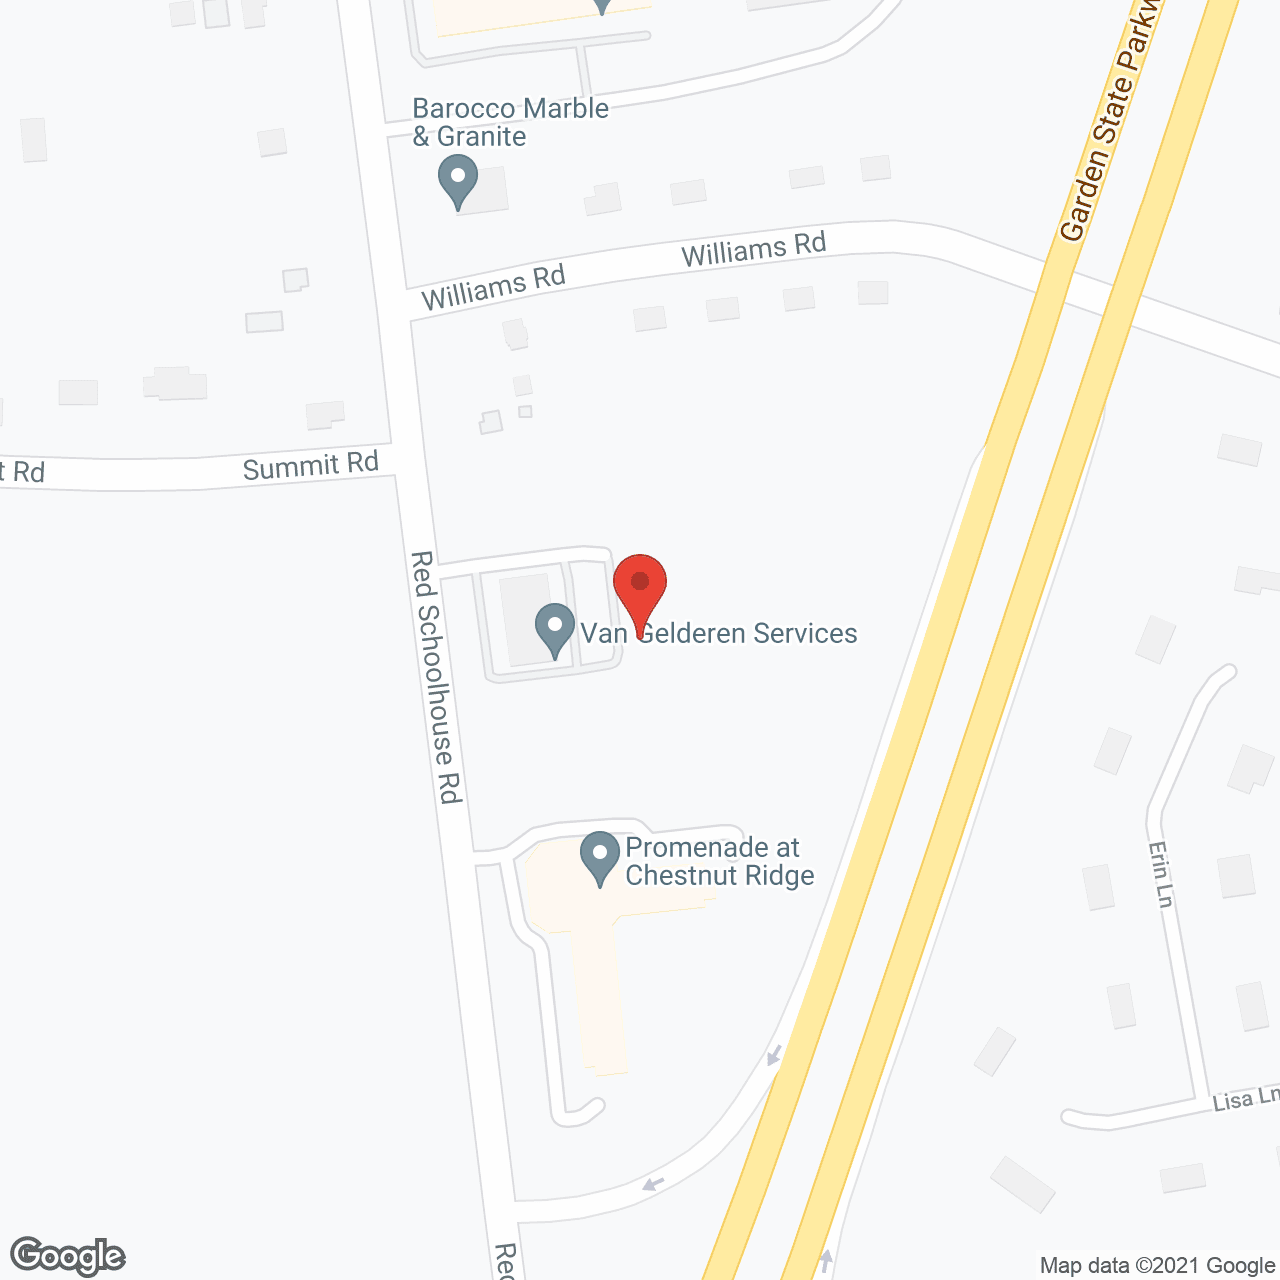 Promenade at Chestnut Ridge in google map